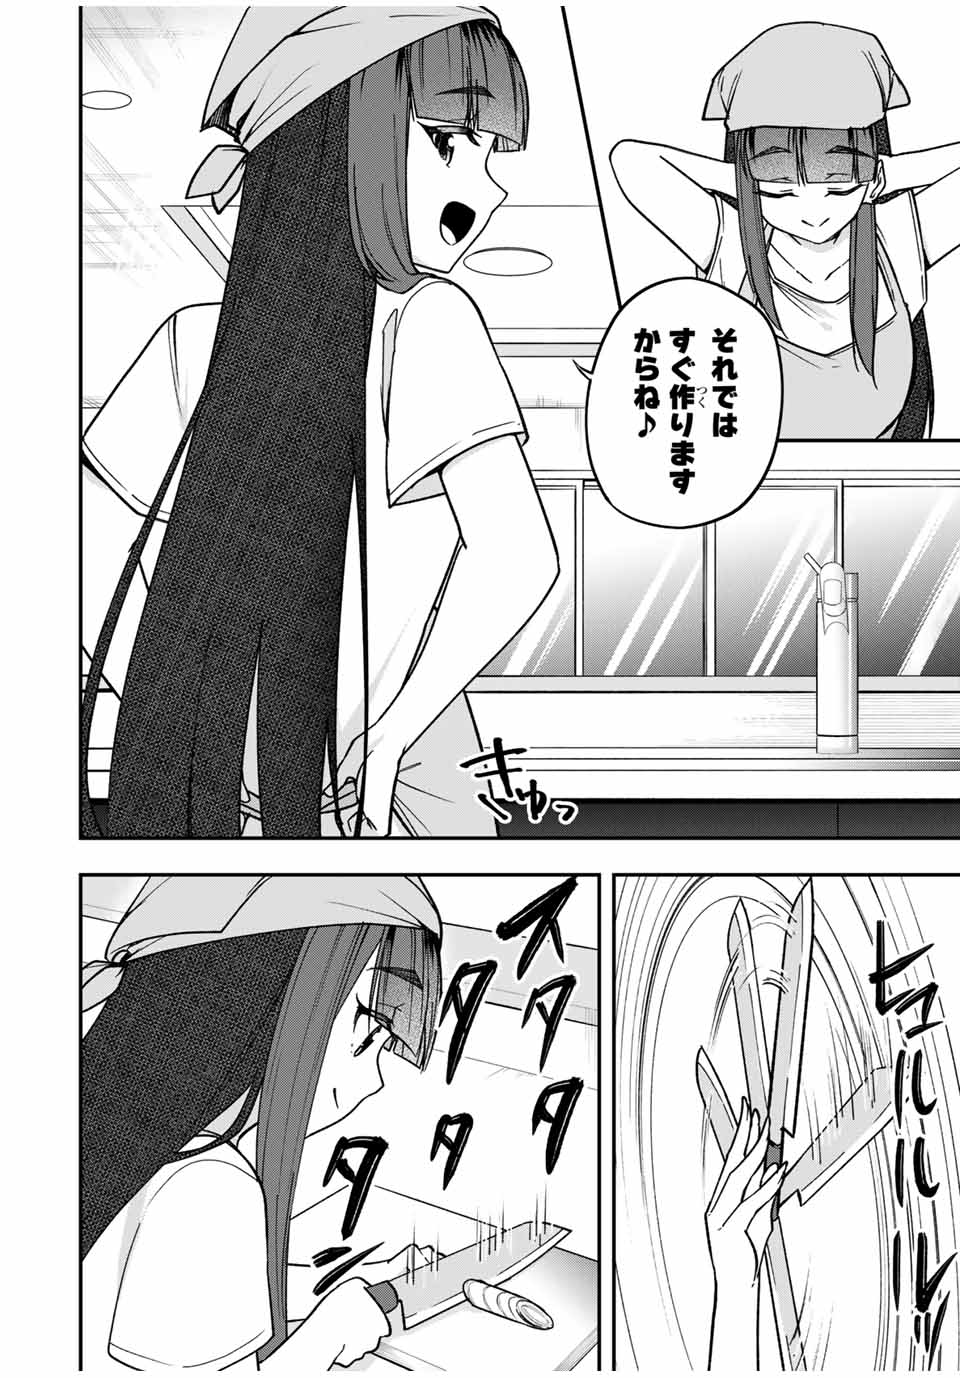 Heroine wa xx Okasegitai - Chapter 7 - Page 4